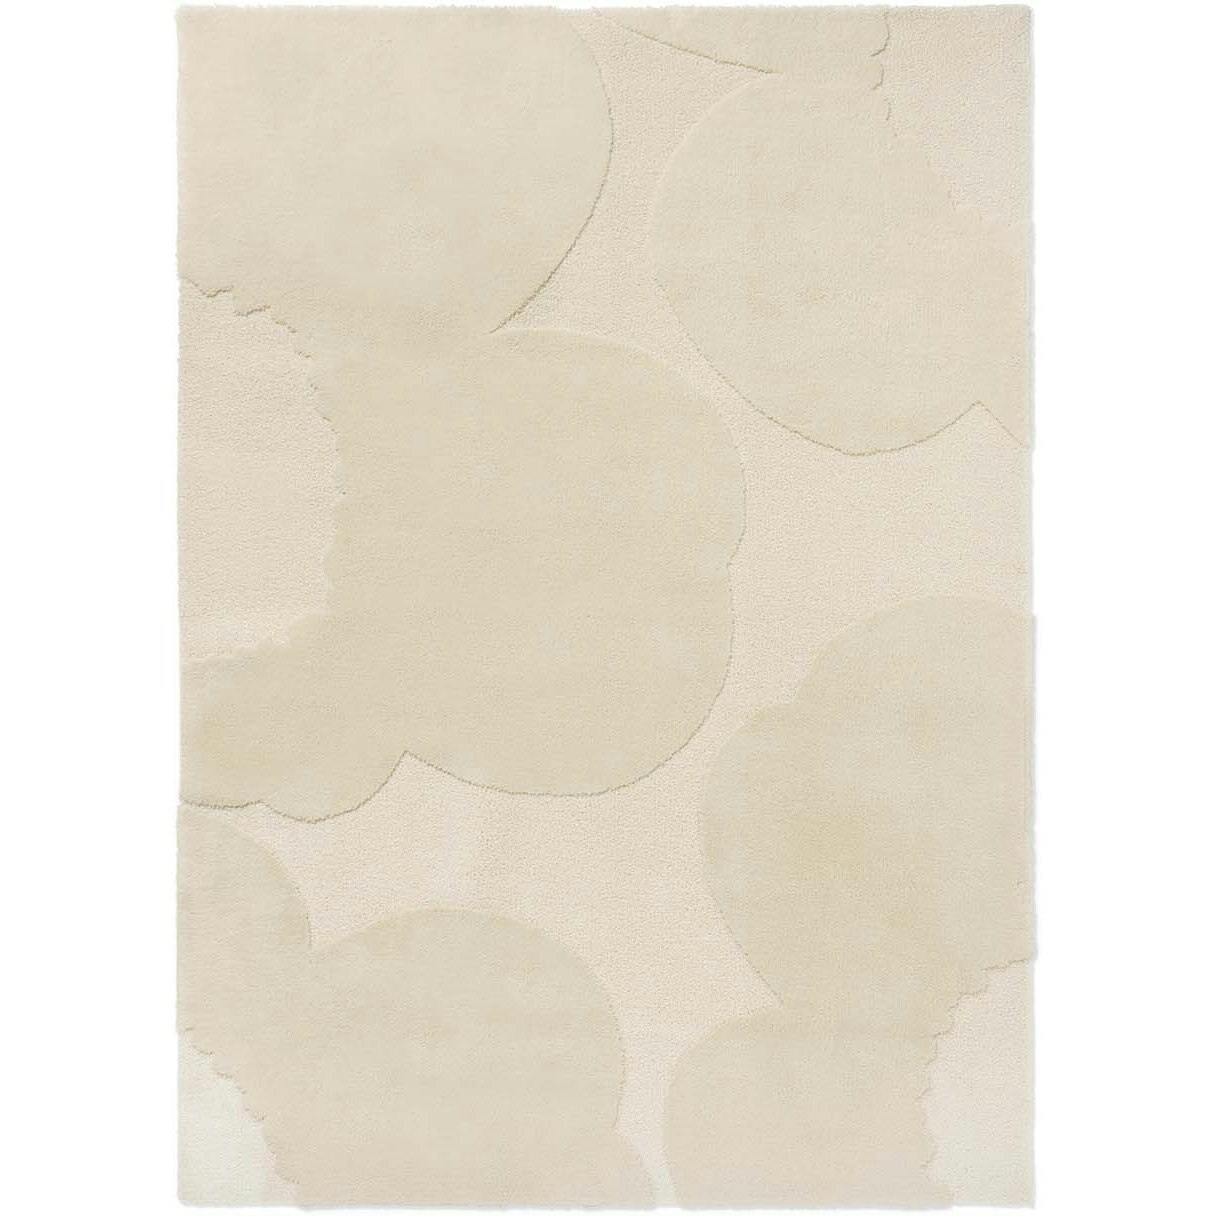 Marimekko Iso Unikko Vloerkleed 200x300 cm, Natural White